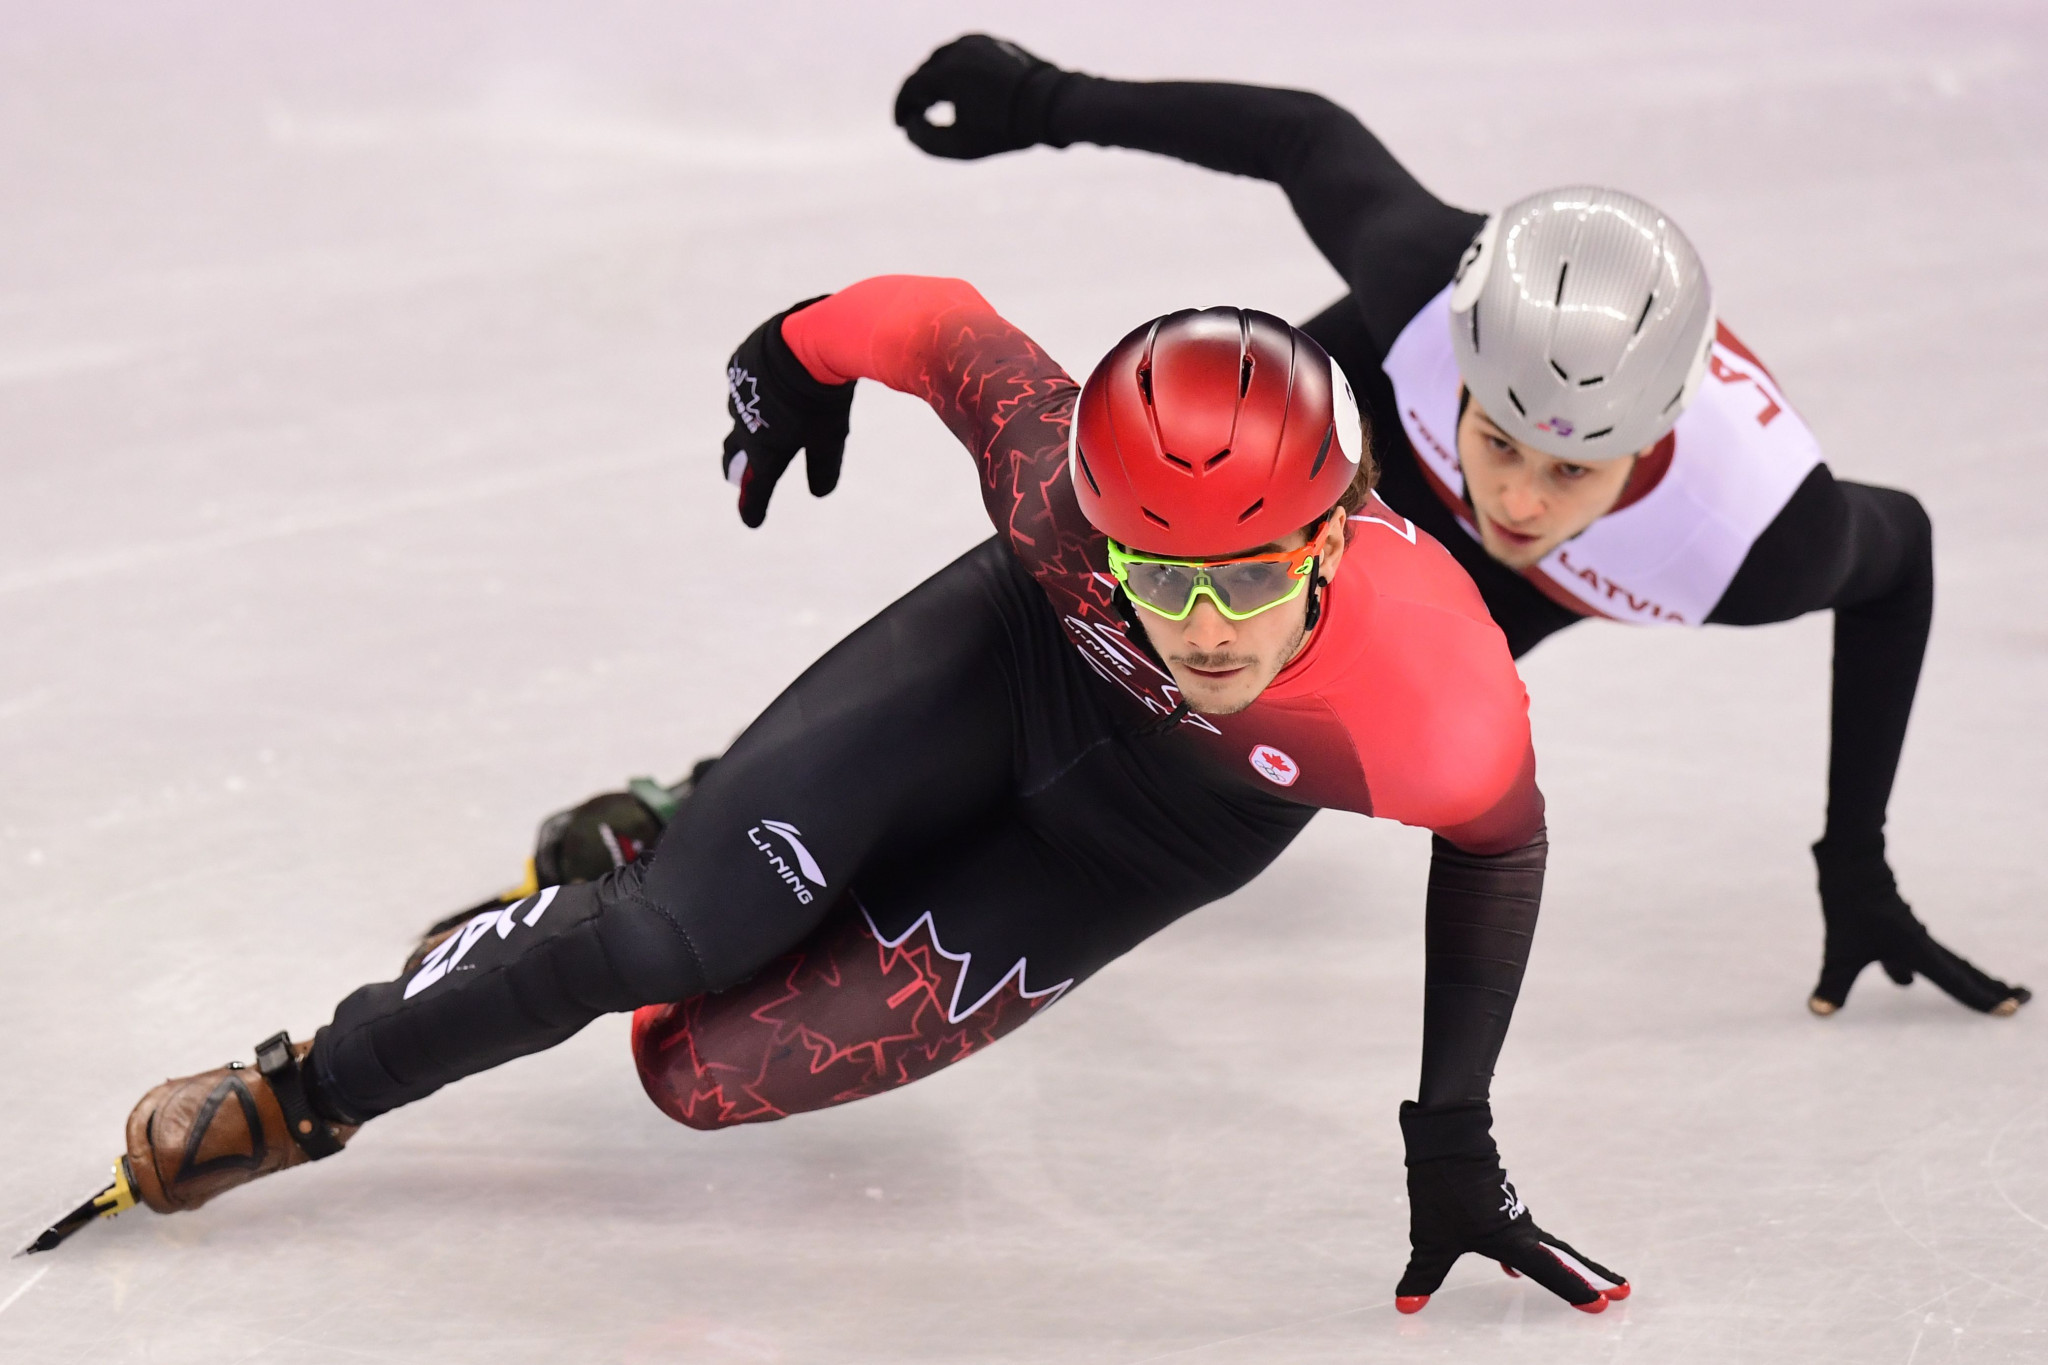 Olympic speed skating champion Girard announces retirement